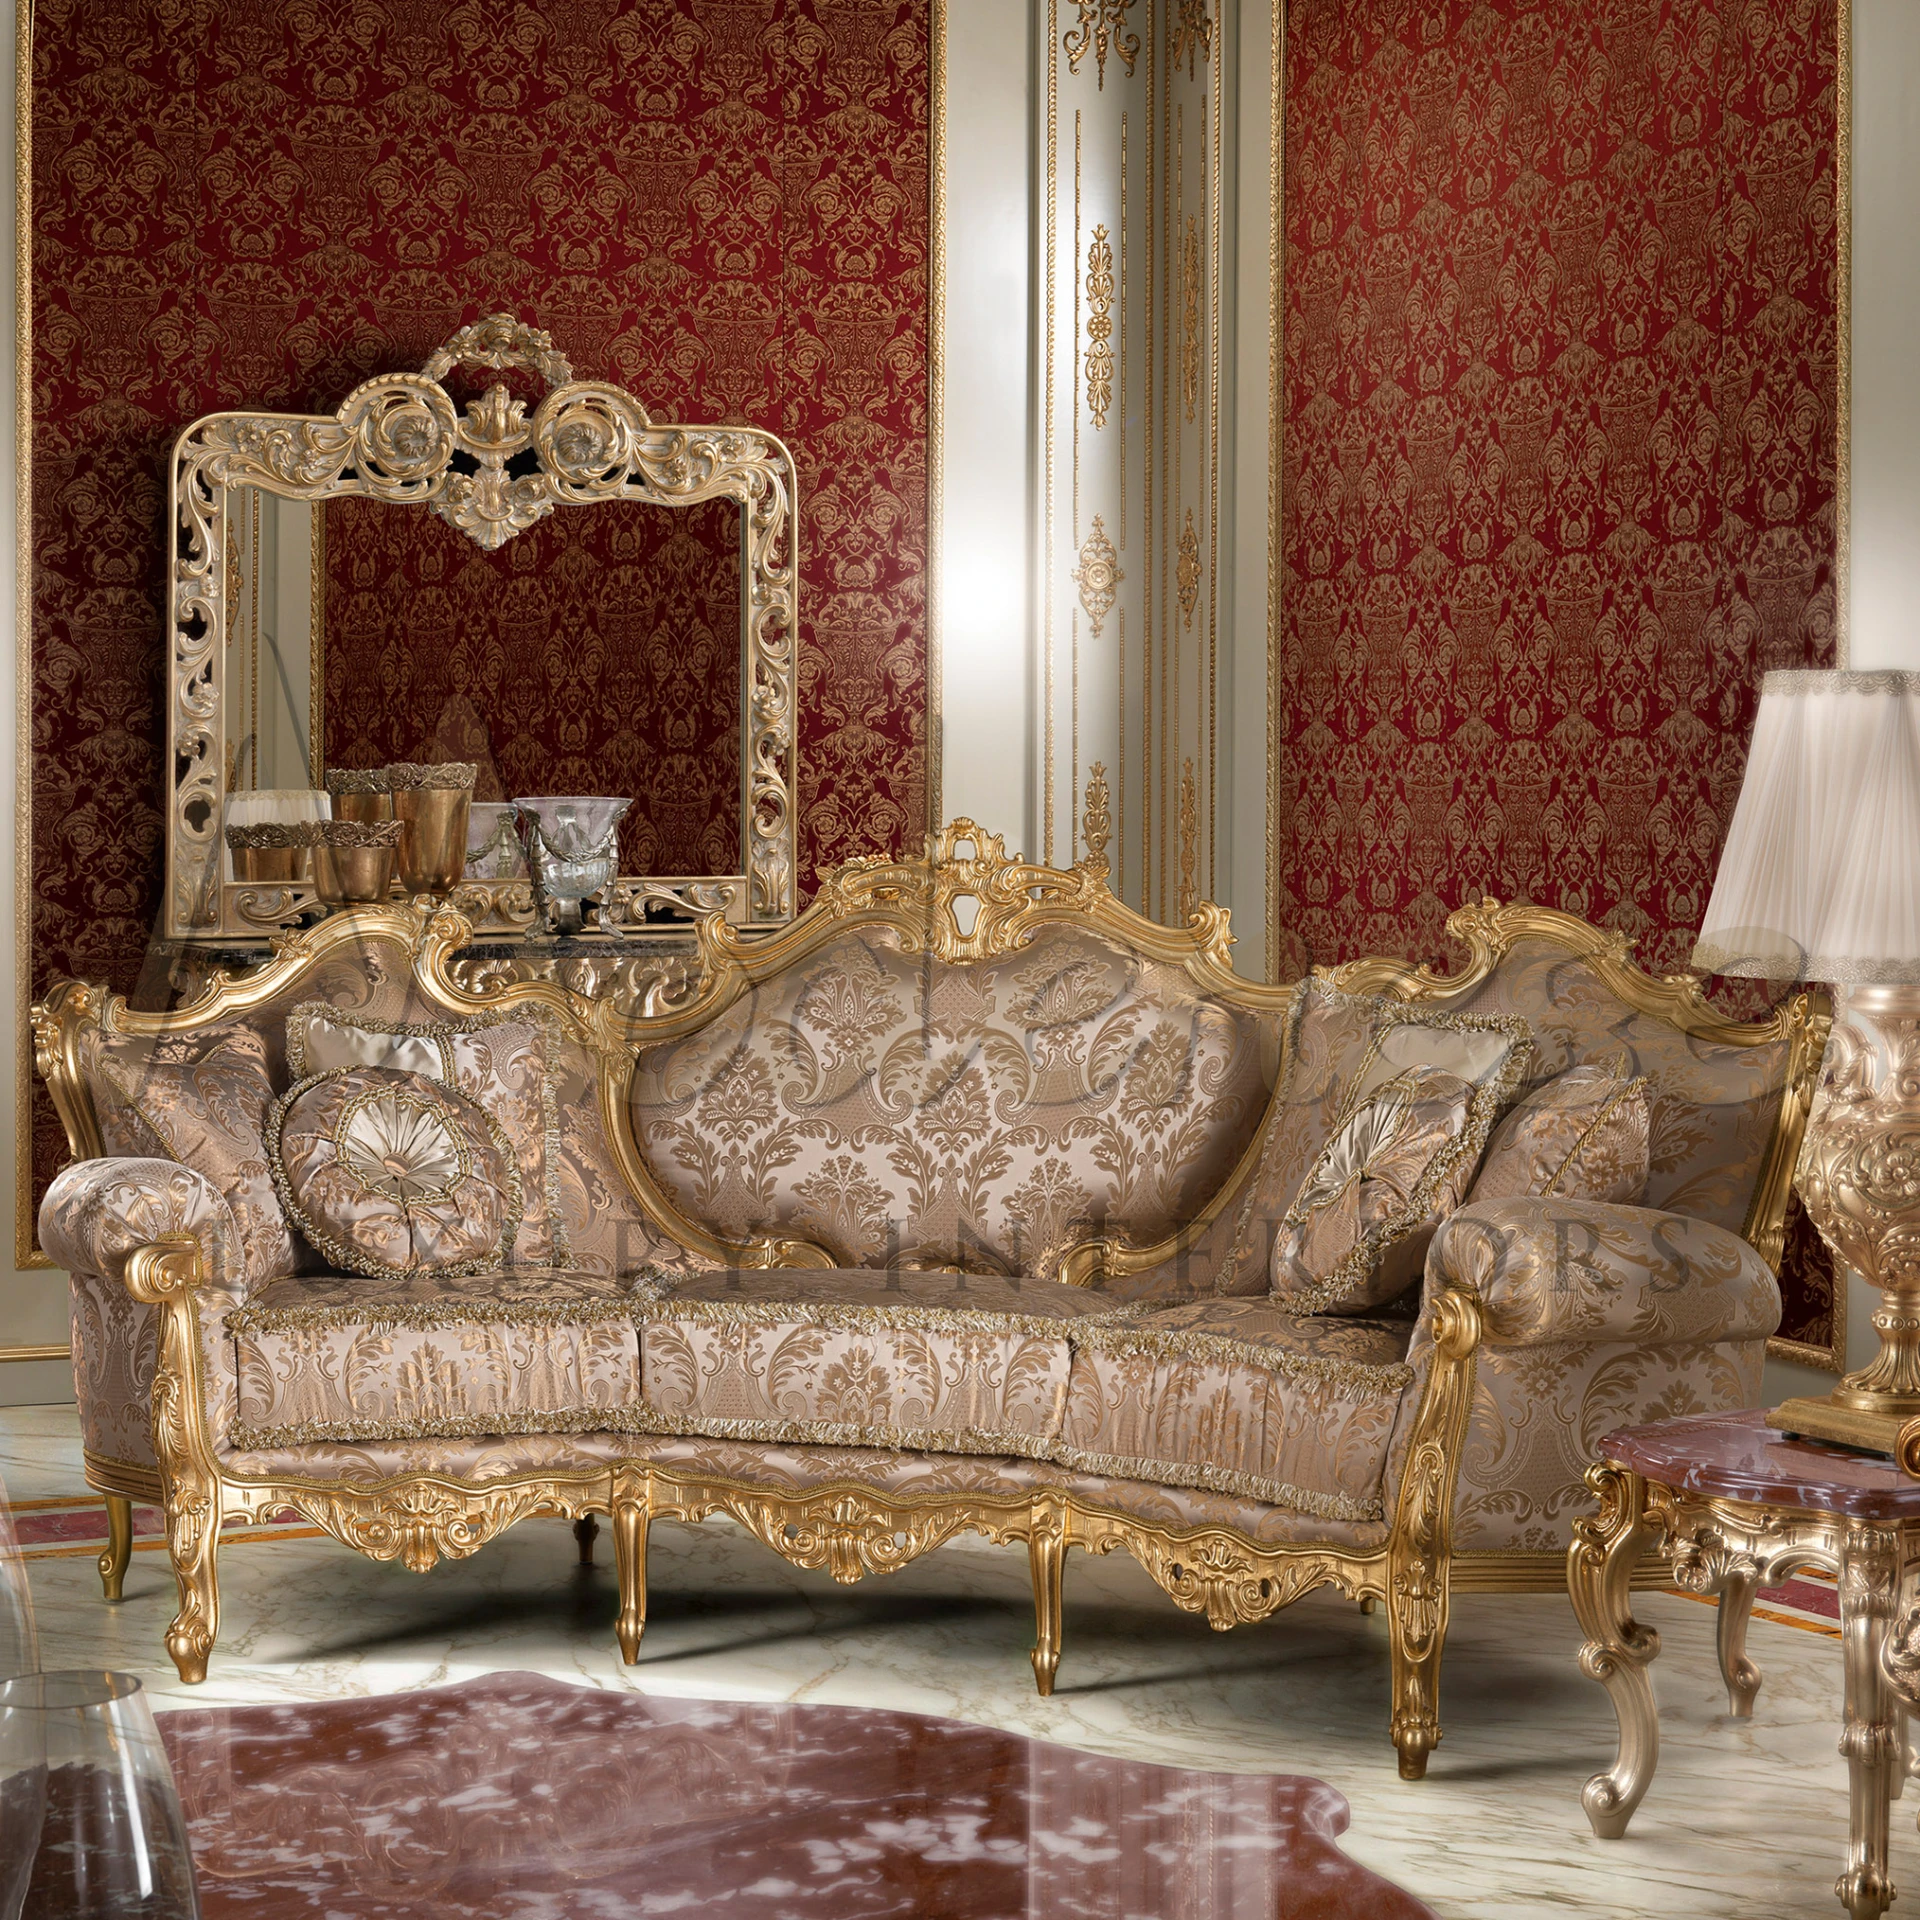  Handmade Italian Baroque Sofa: Luxurious Comfort in Old-World Style